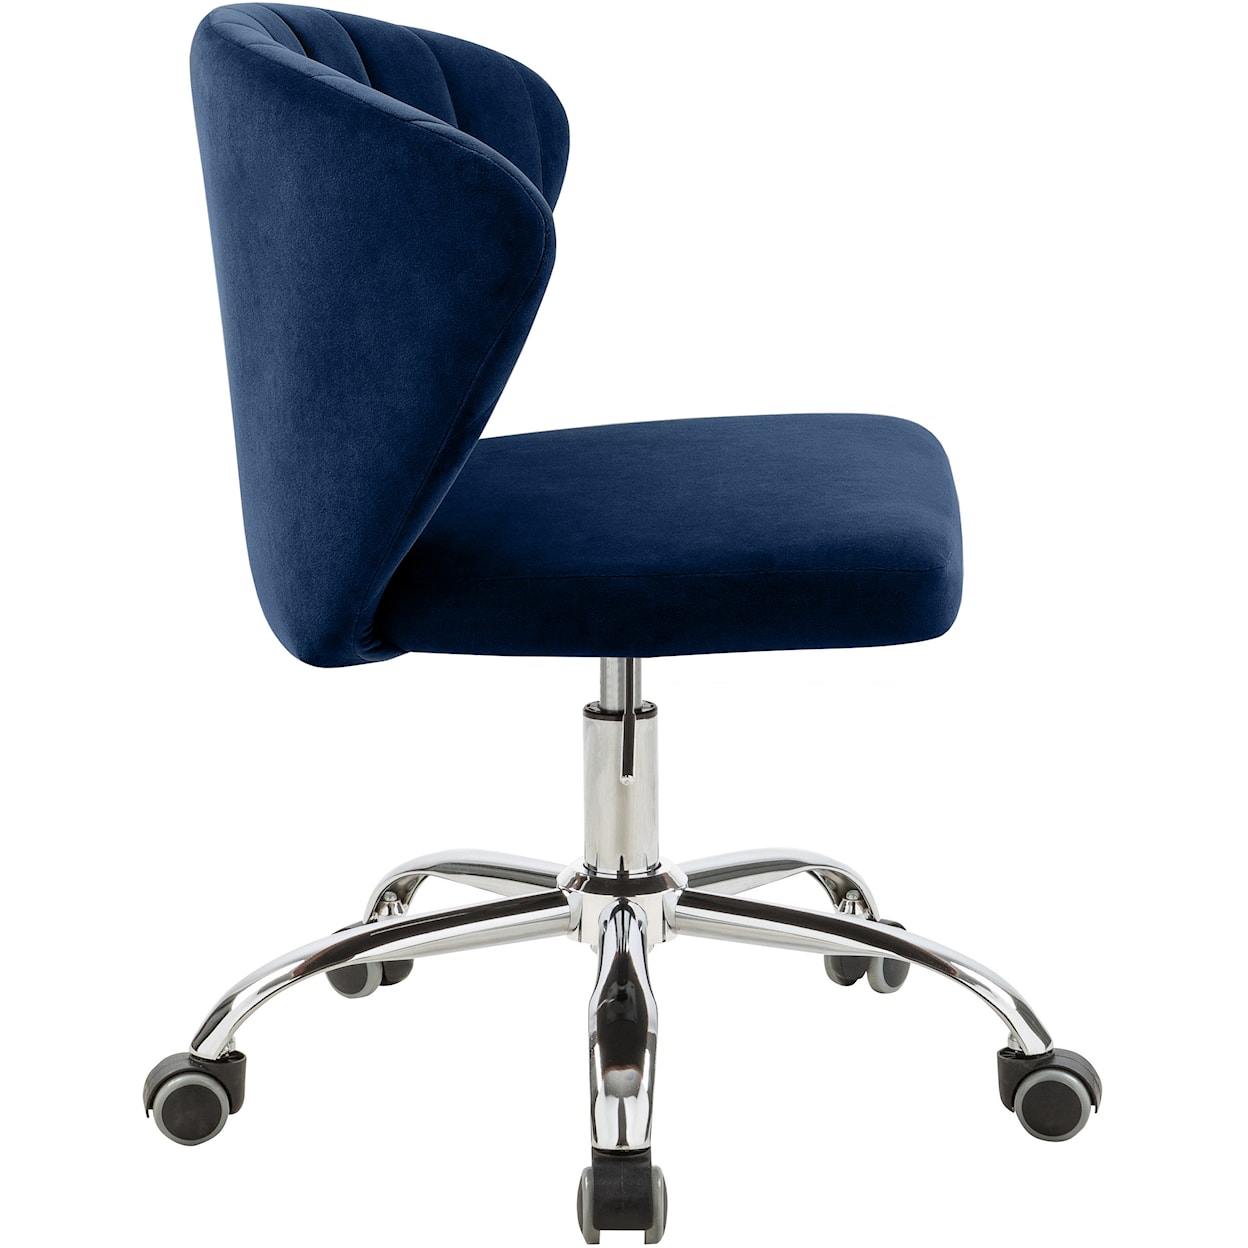 Meridian Furniture Finley Navy Velvet Office Chair with Chrome Base